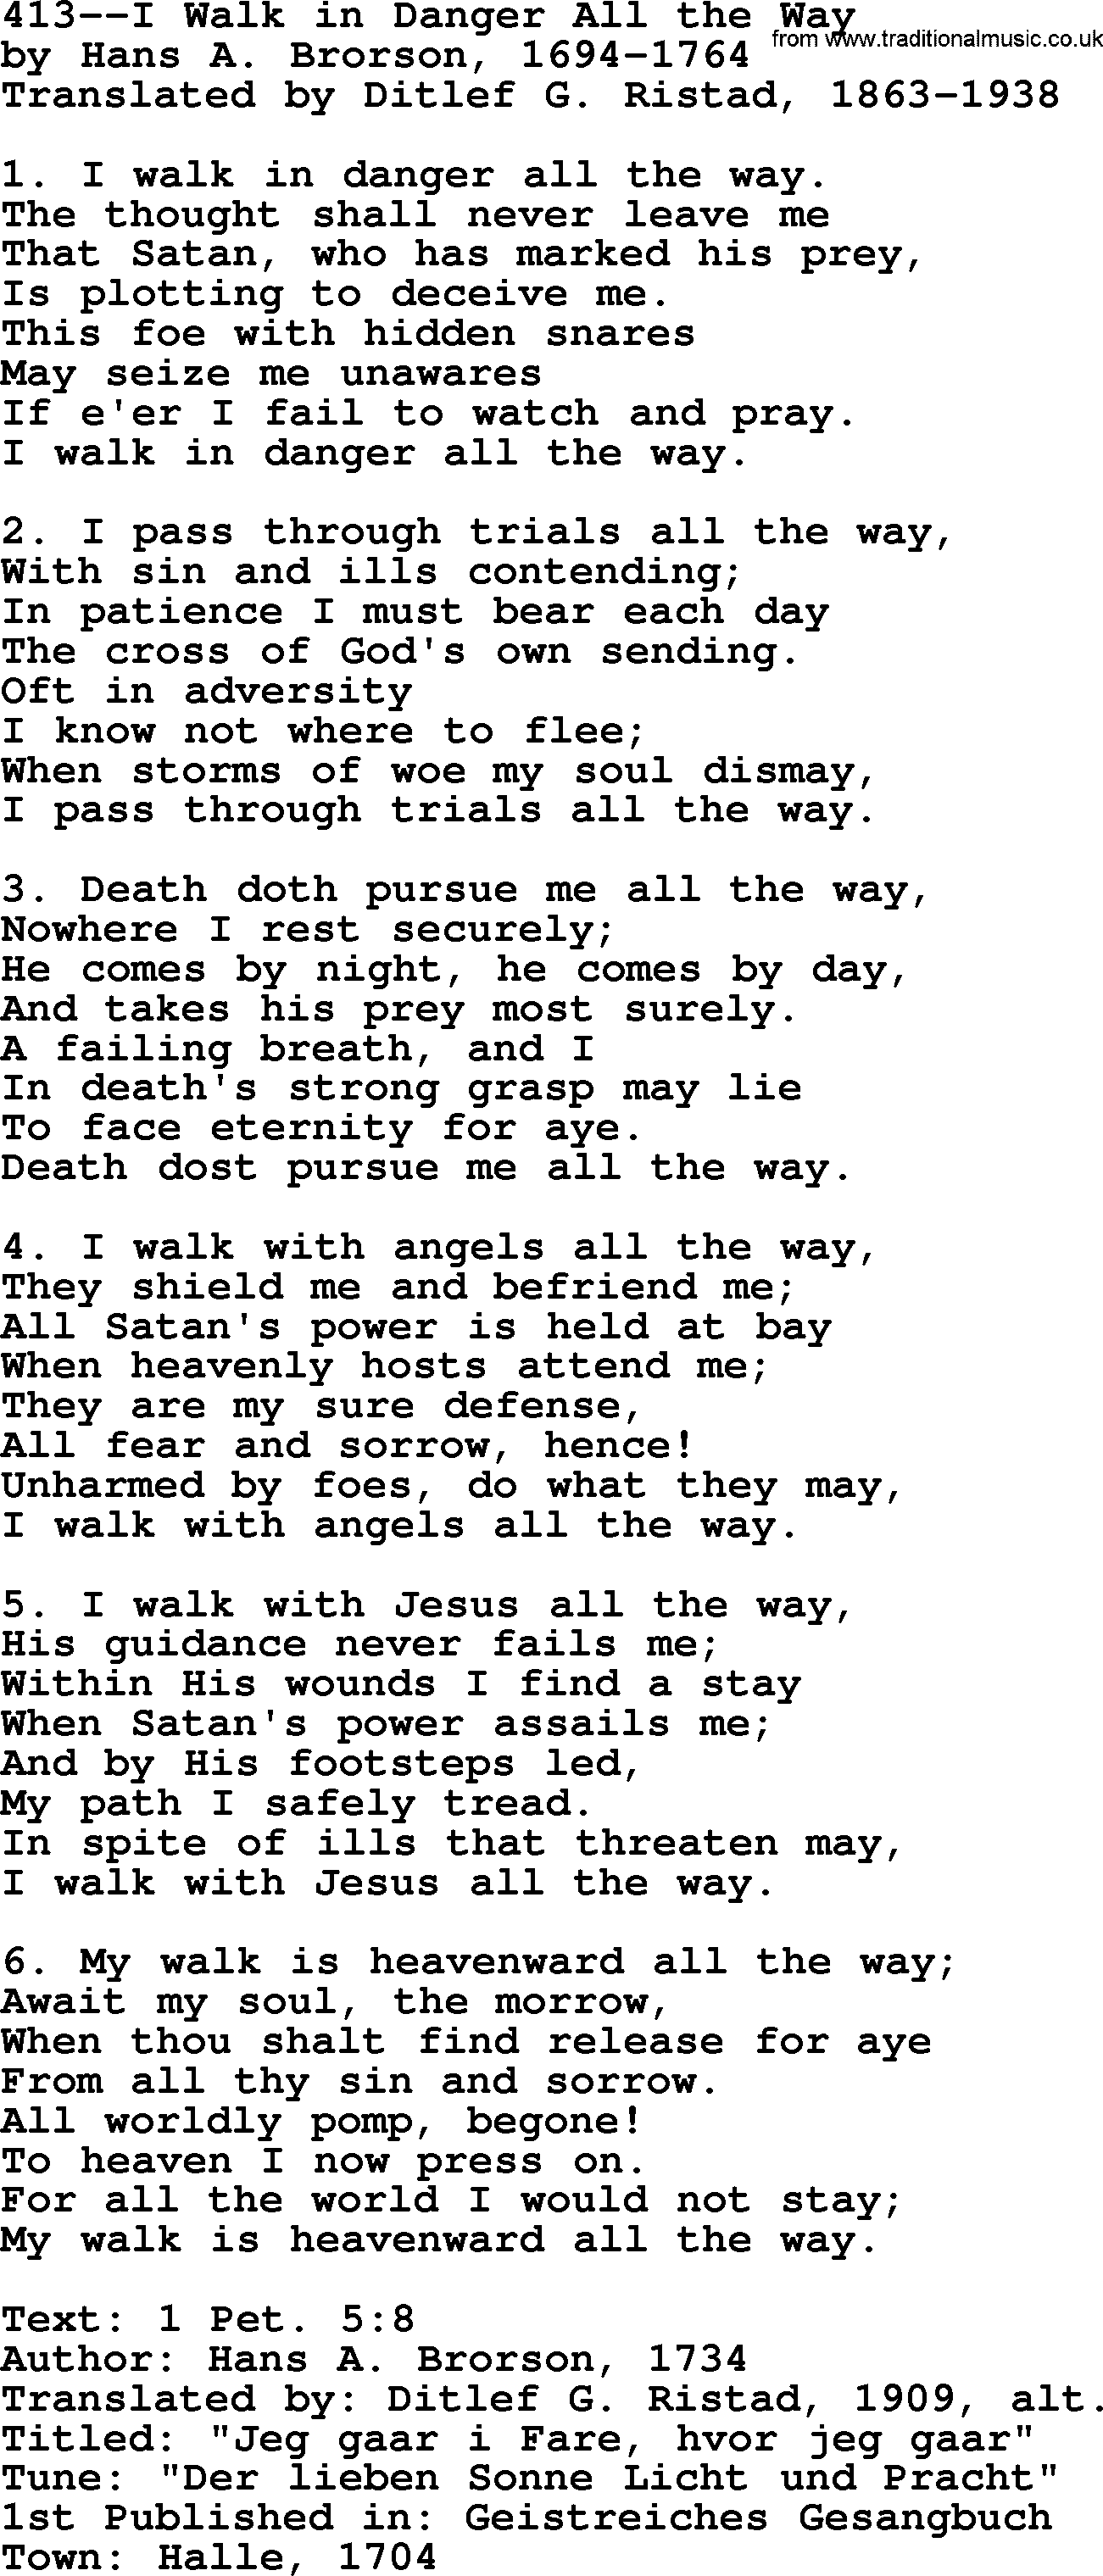 Lutheran Hymn: 413--I Walk in Danger All the Way.txt lyrics with PDF